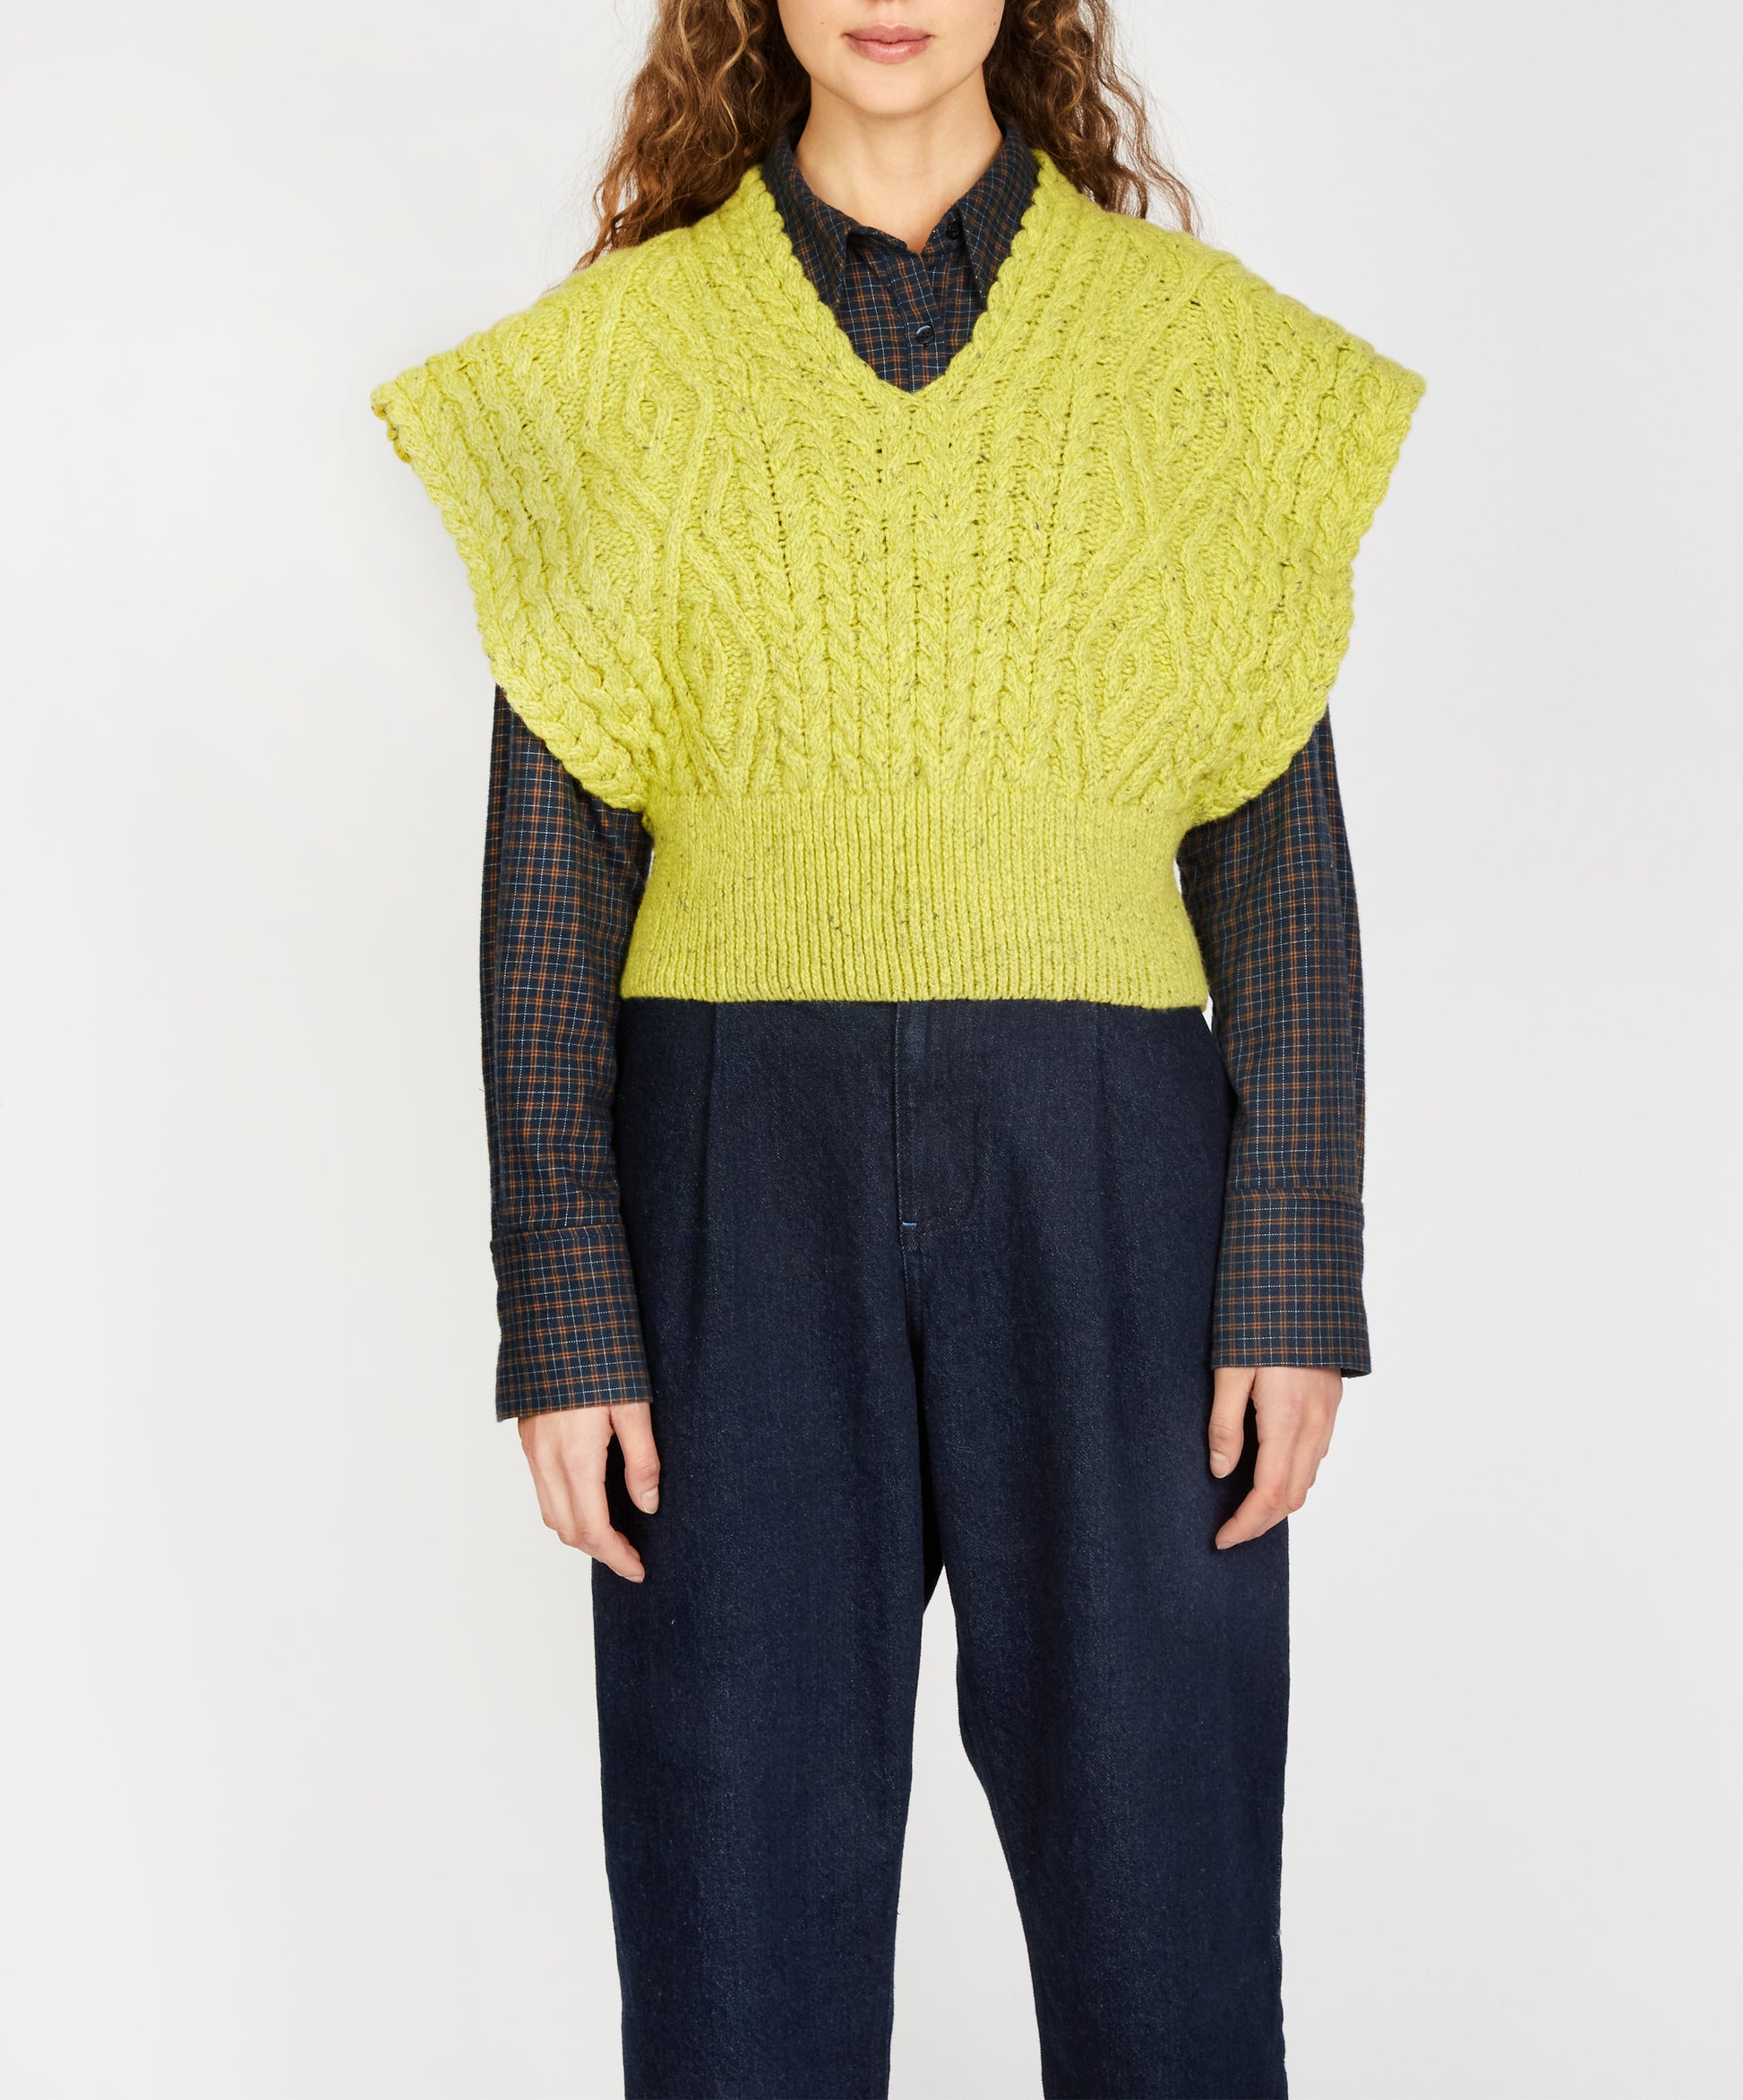 IrelandsEye Knitwear Farmleigh Diamond Vest Chartreuse